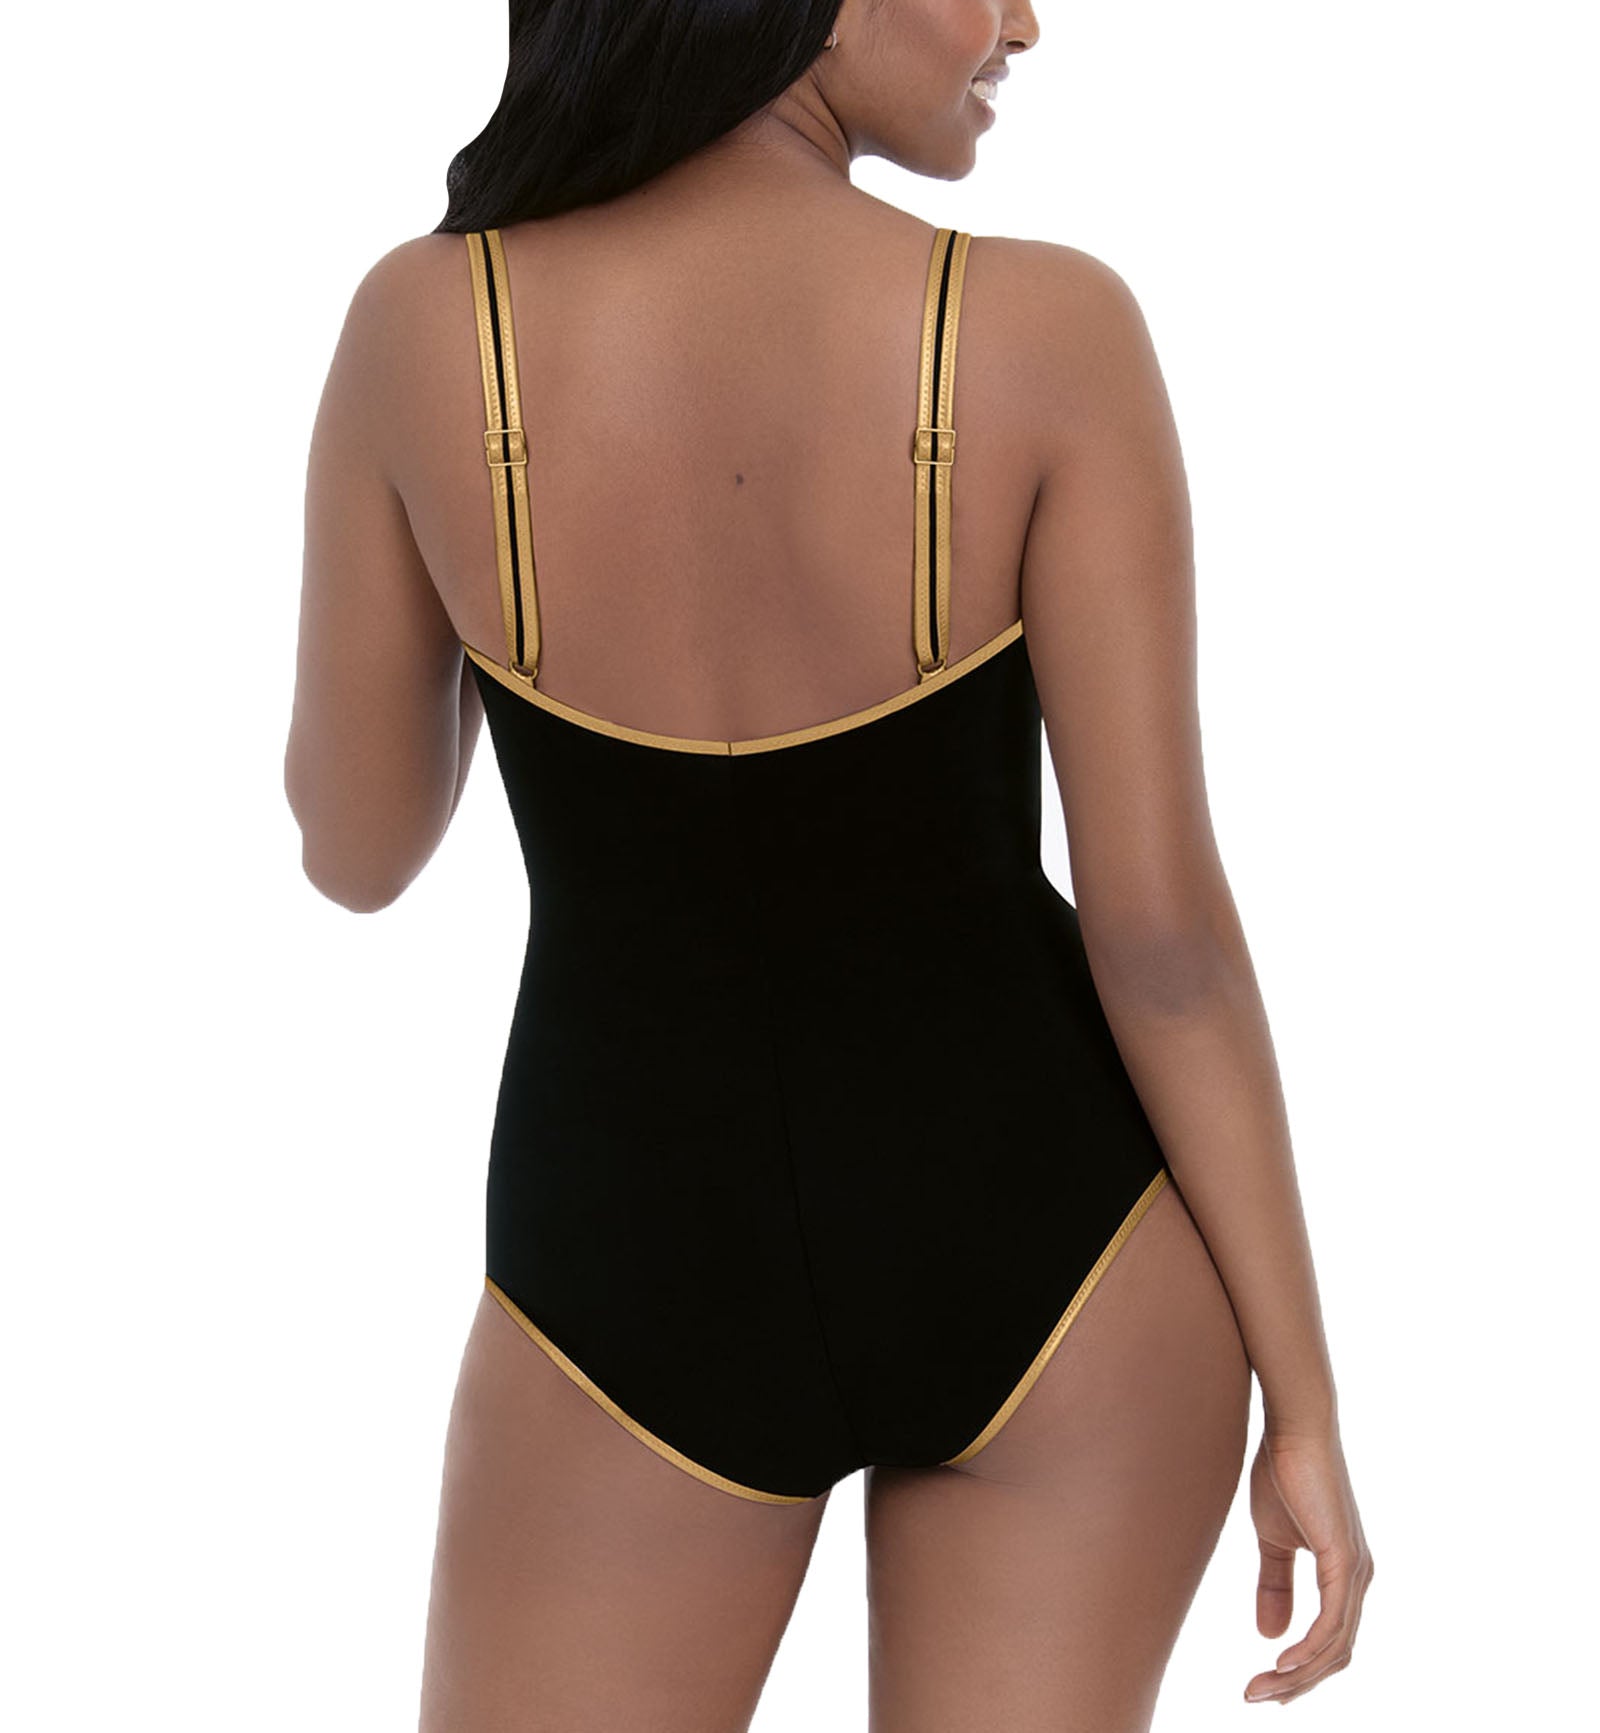 Anita Trendy Giraffe Jolina Spacer Cup One Piece Swimsuit (7277),32D,Black - Black,32D